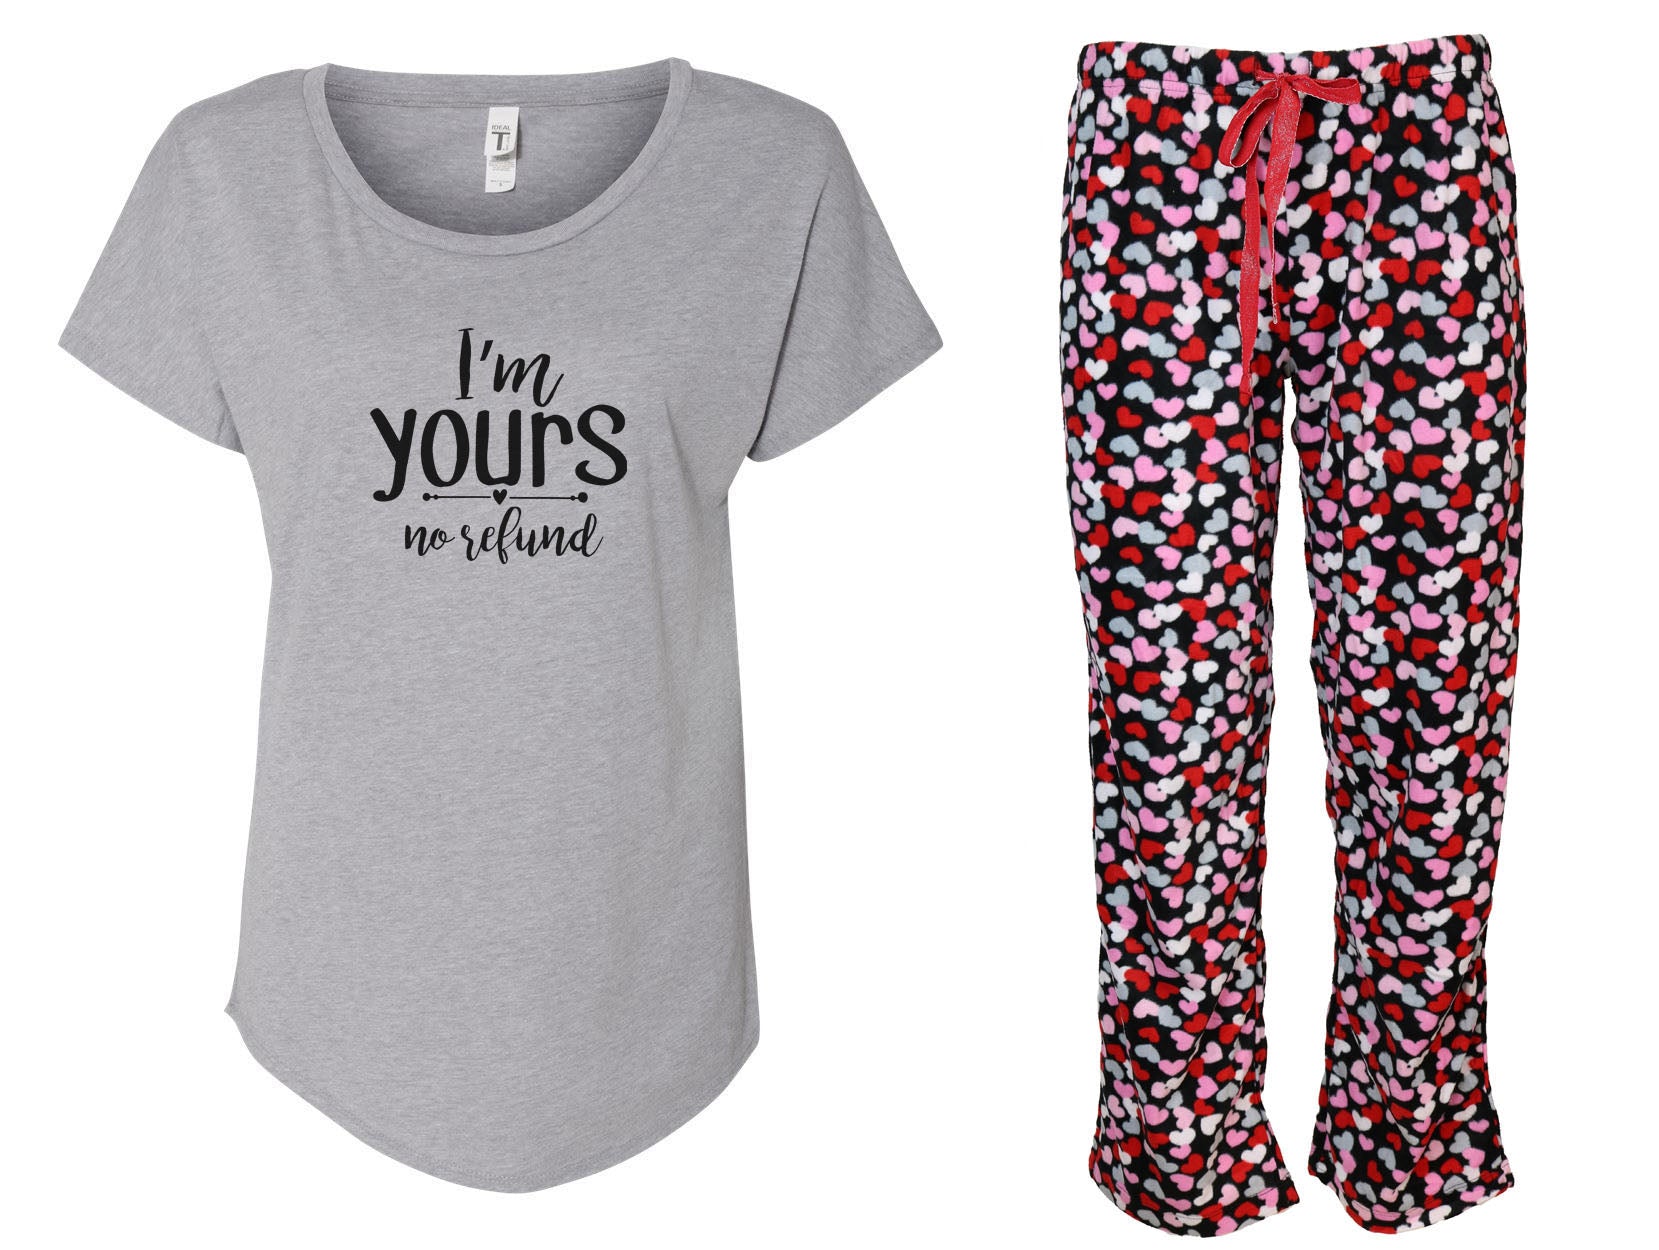 I'm yours, No refunds Ladies Shirt & Pant Pajama Set – Shop Making Waves